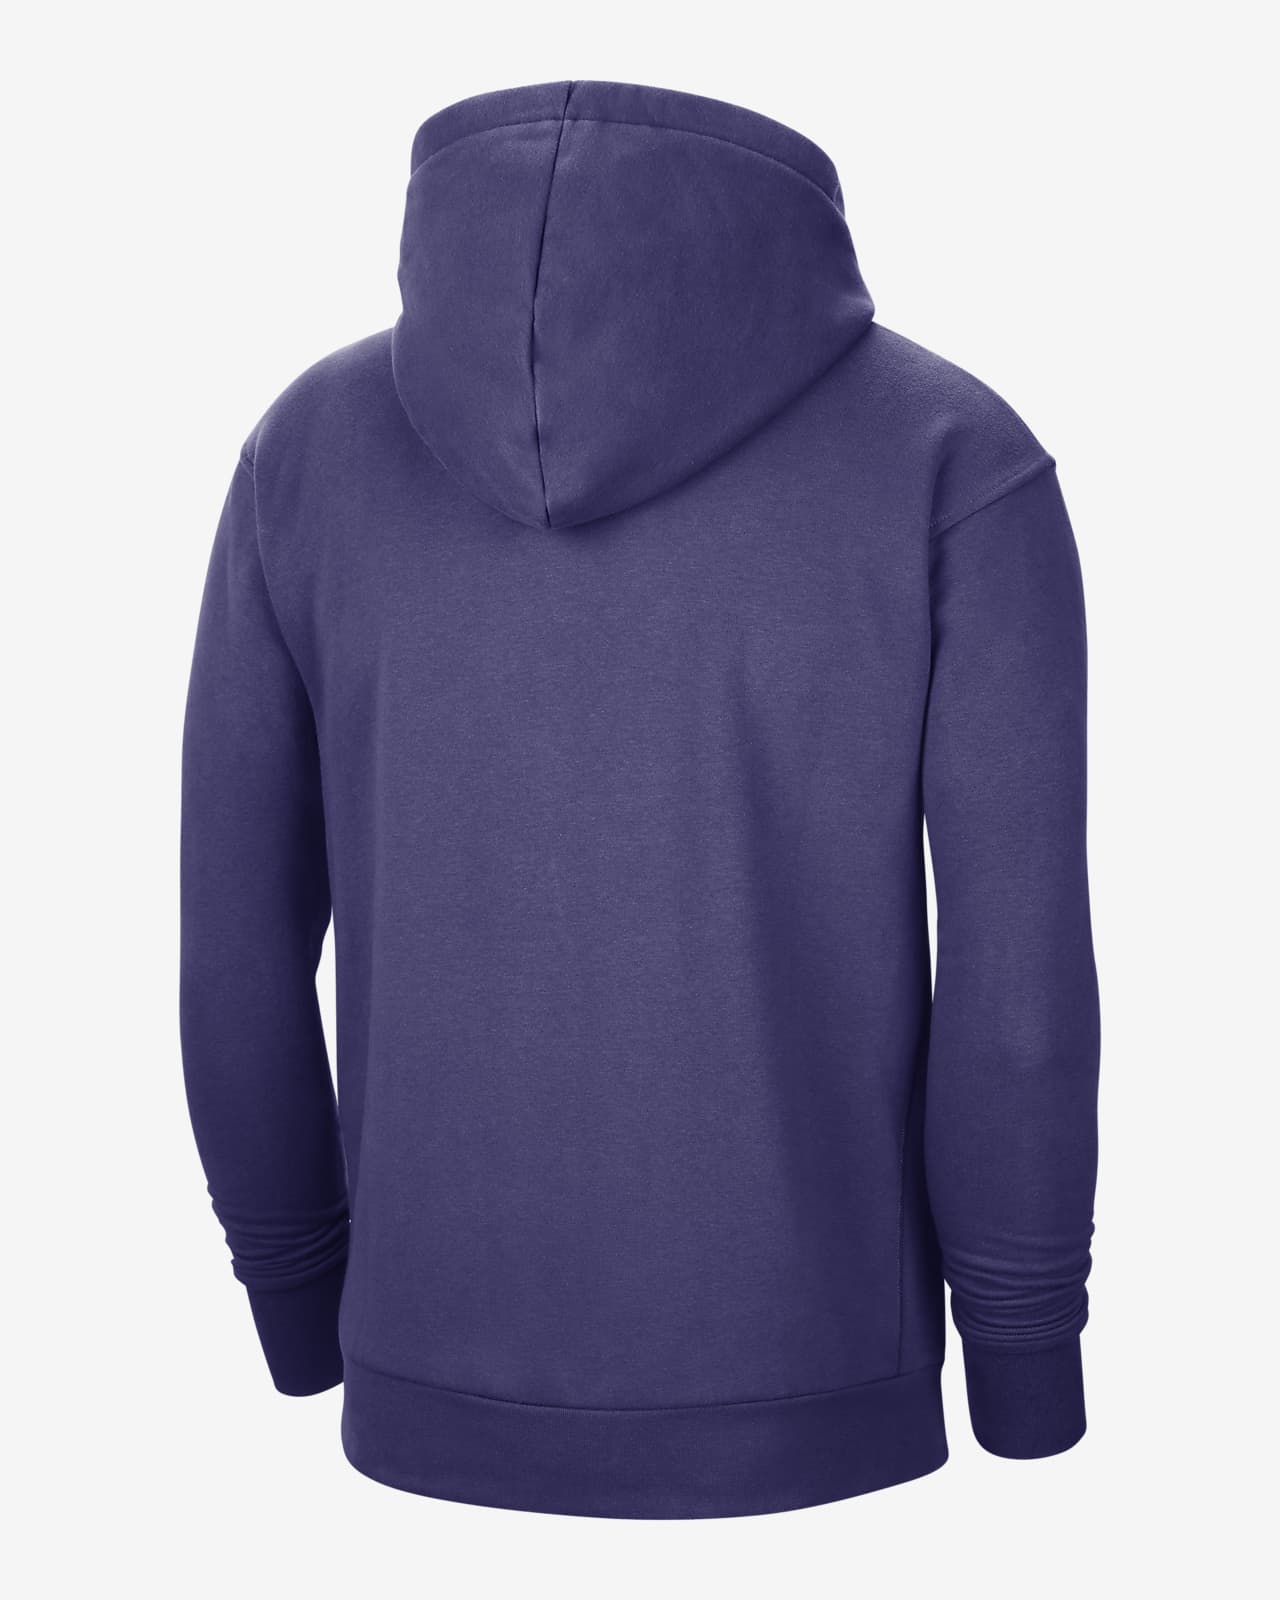 Basketball Phoenix Suns Nike 2023 logo T-shirt, hoodie, sweater